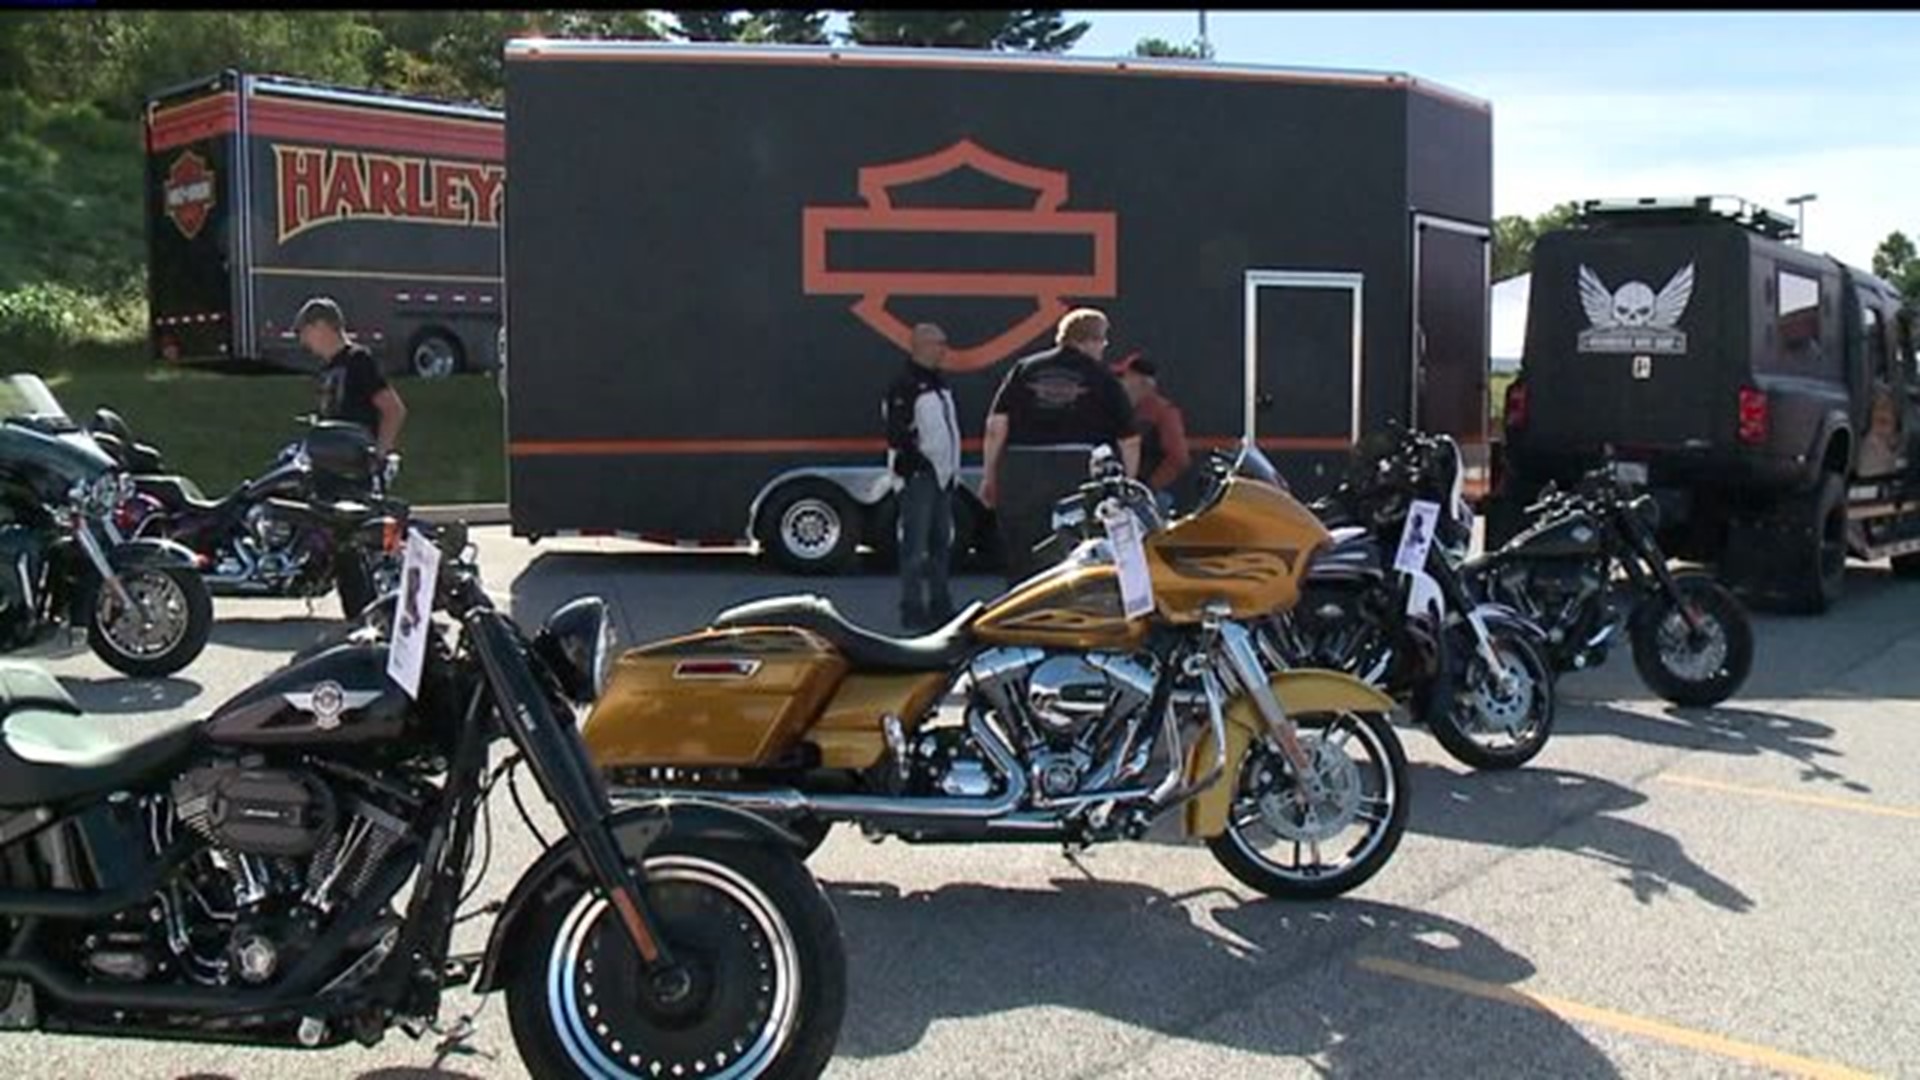 Harley Davidson kicks off annual open house for bike week in York County